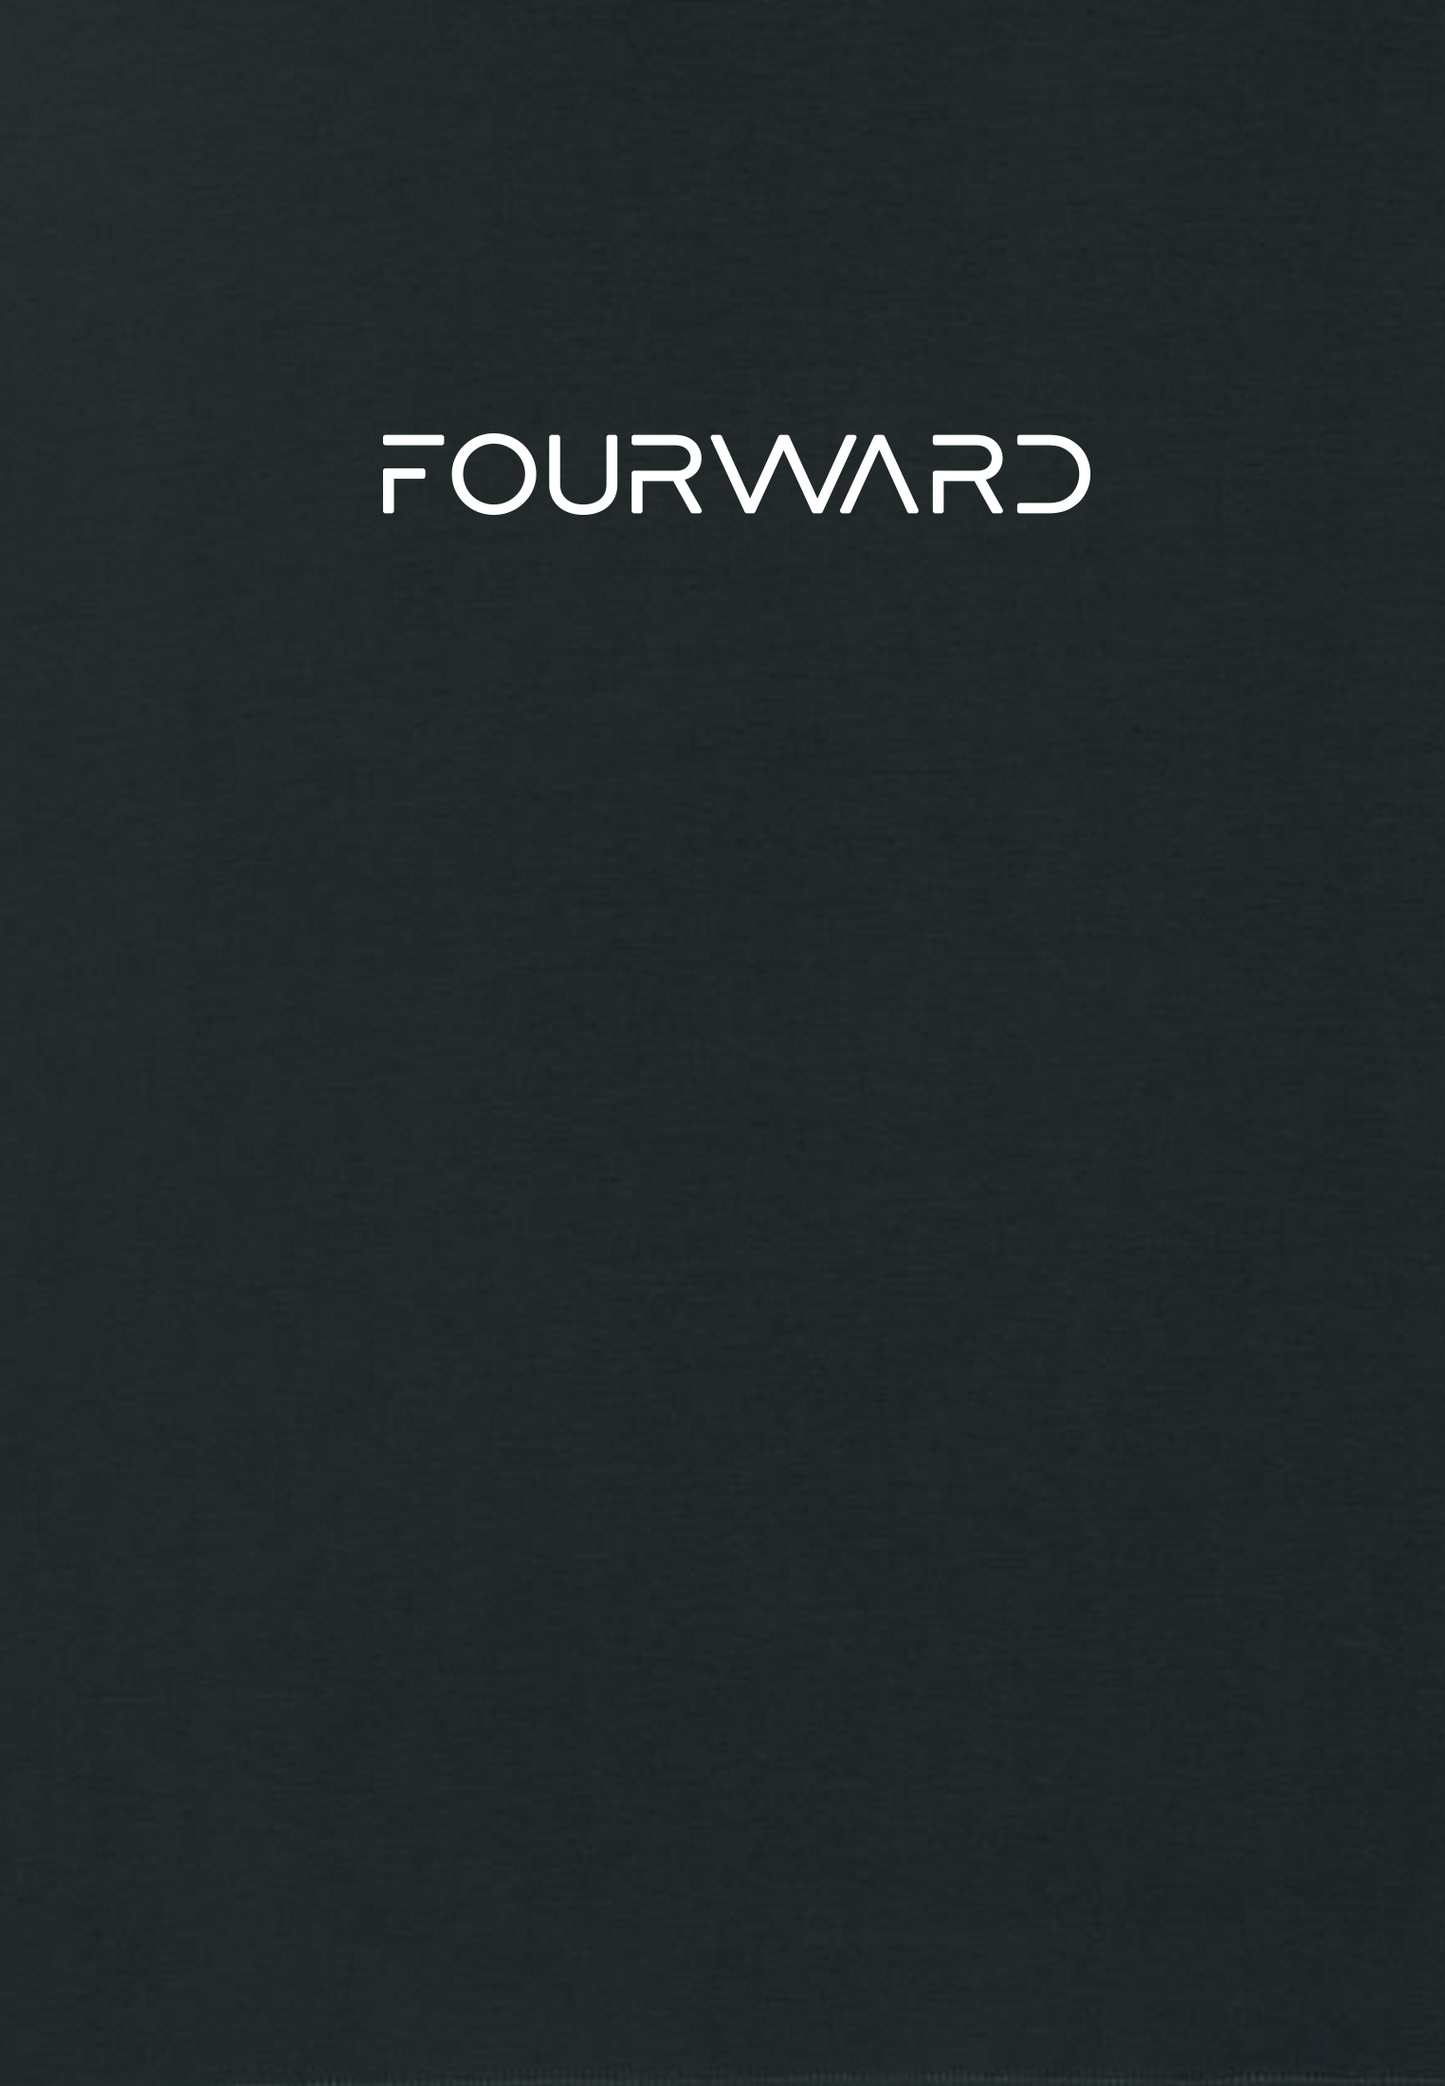 FOURWARD OVERSIZE SHIRT CLASSIC LOGO BLACK